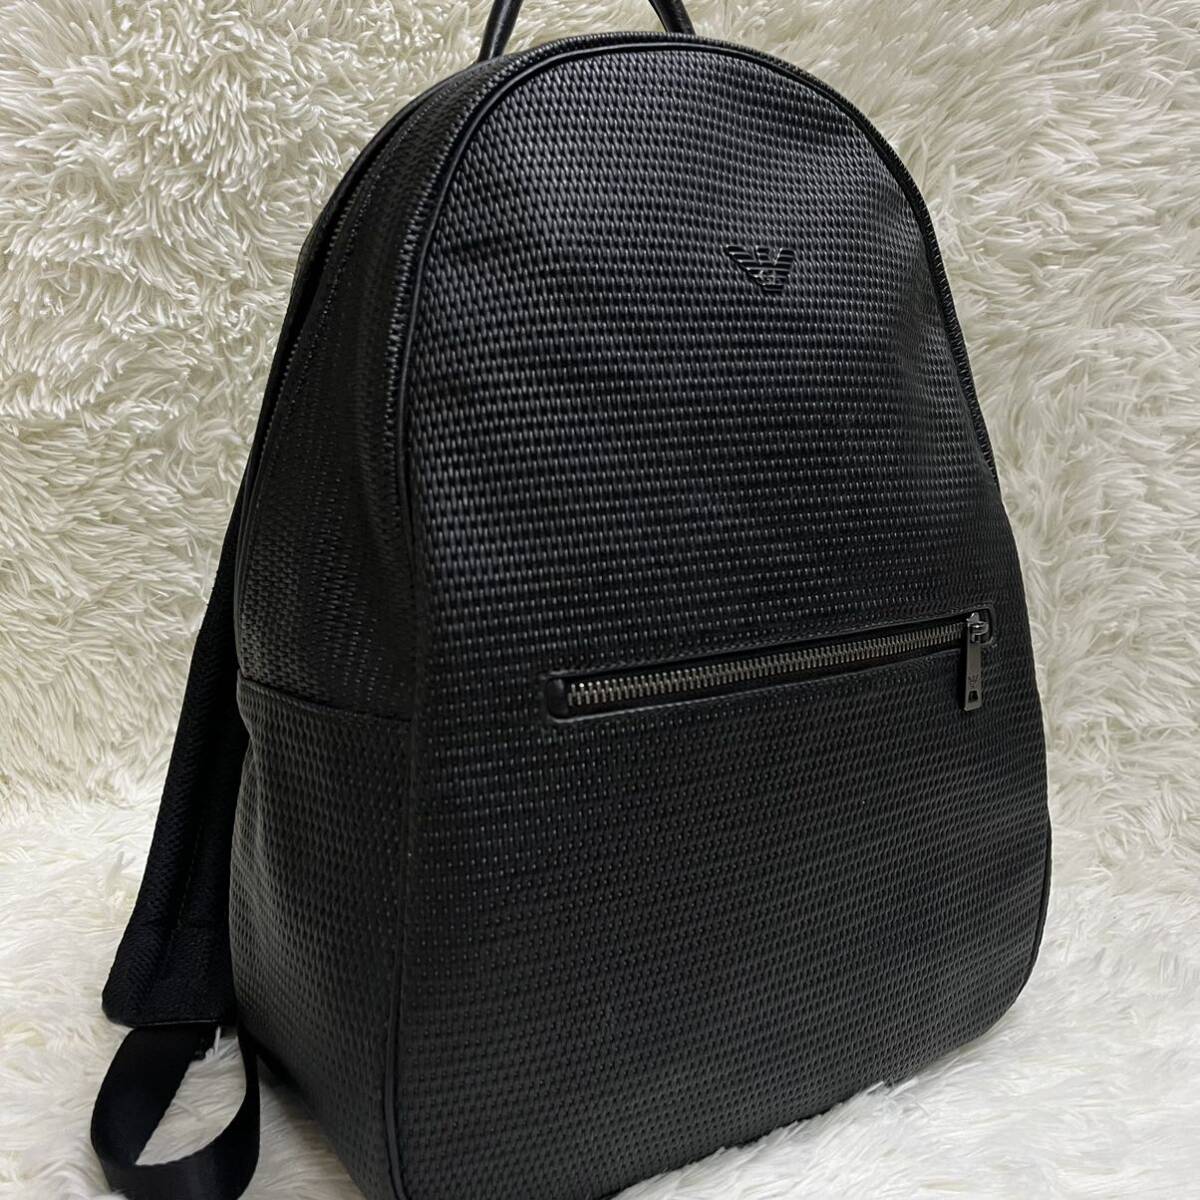  ultimate beautiful goods super rare business Armani /ARMANI JEANSen Boss leather type pushed .A4* high capacity rucksack backpack bag men's black black 